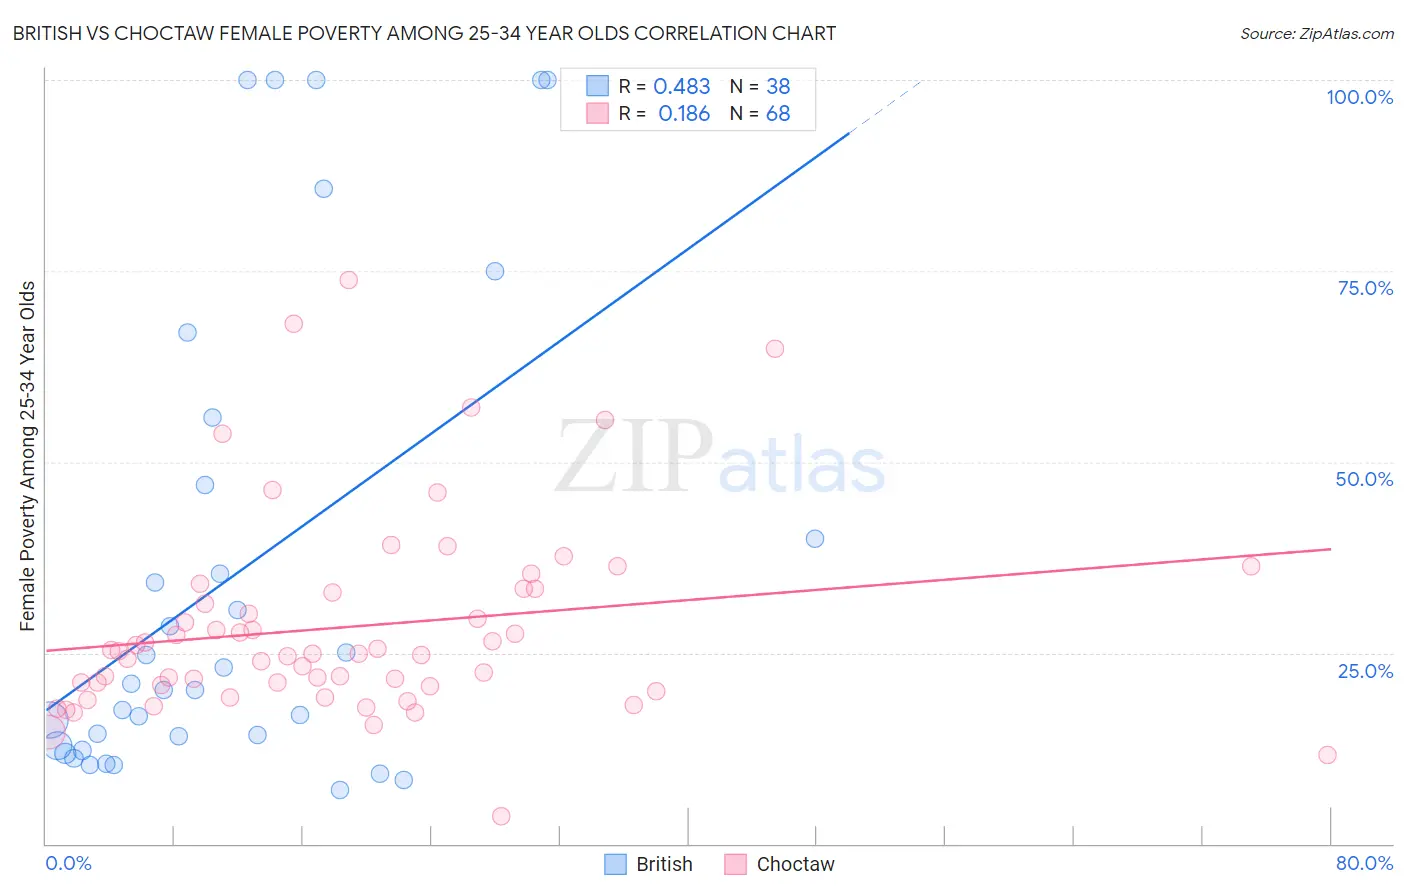 British vs Choctaw Female Poverty Among 25-34 Year Olds